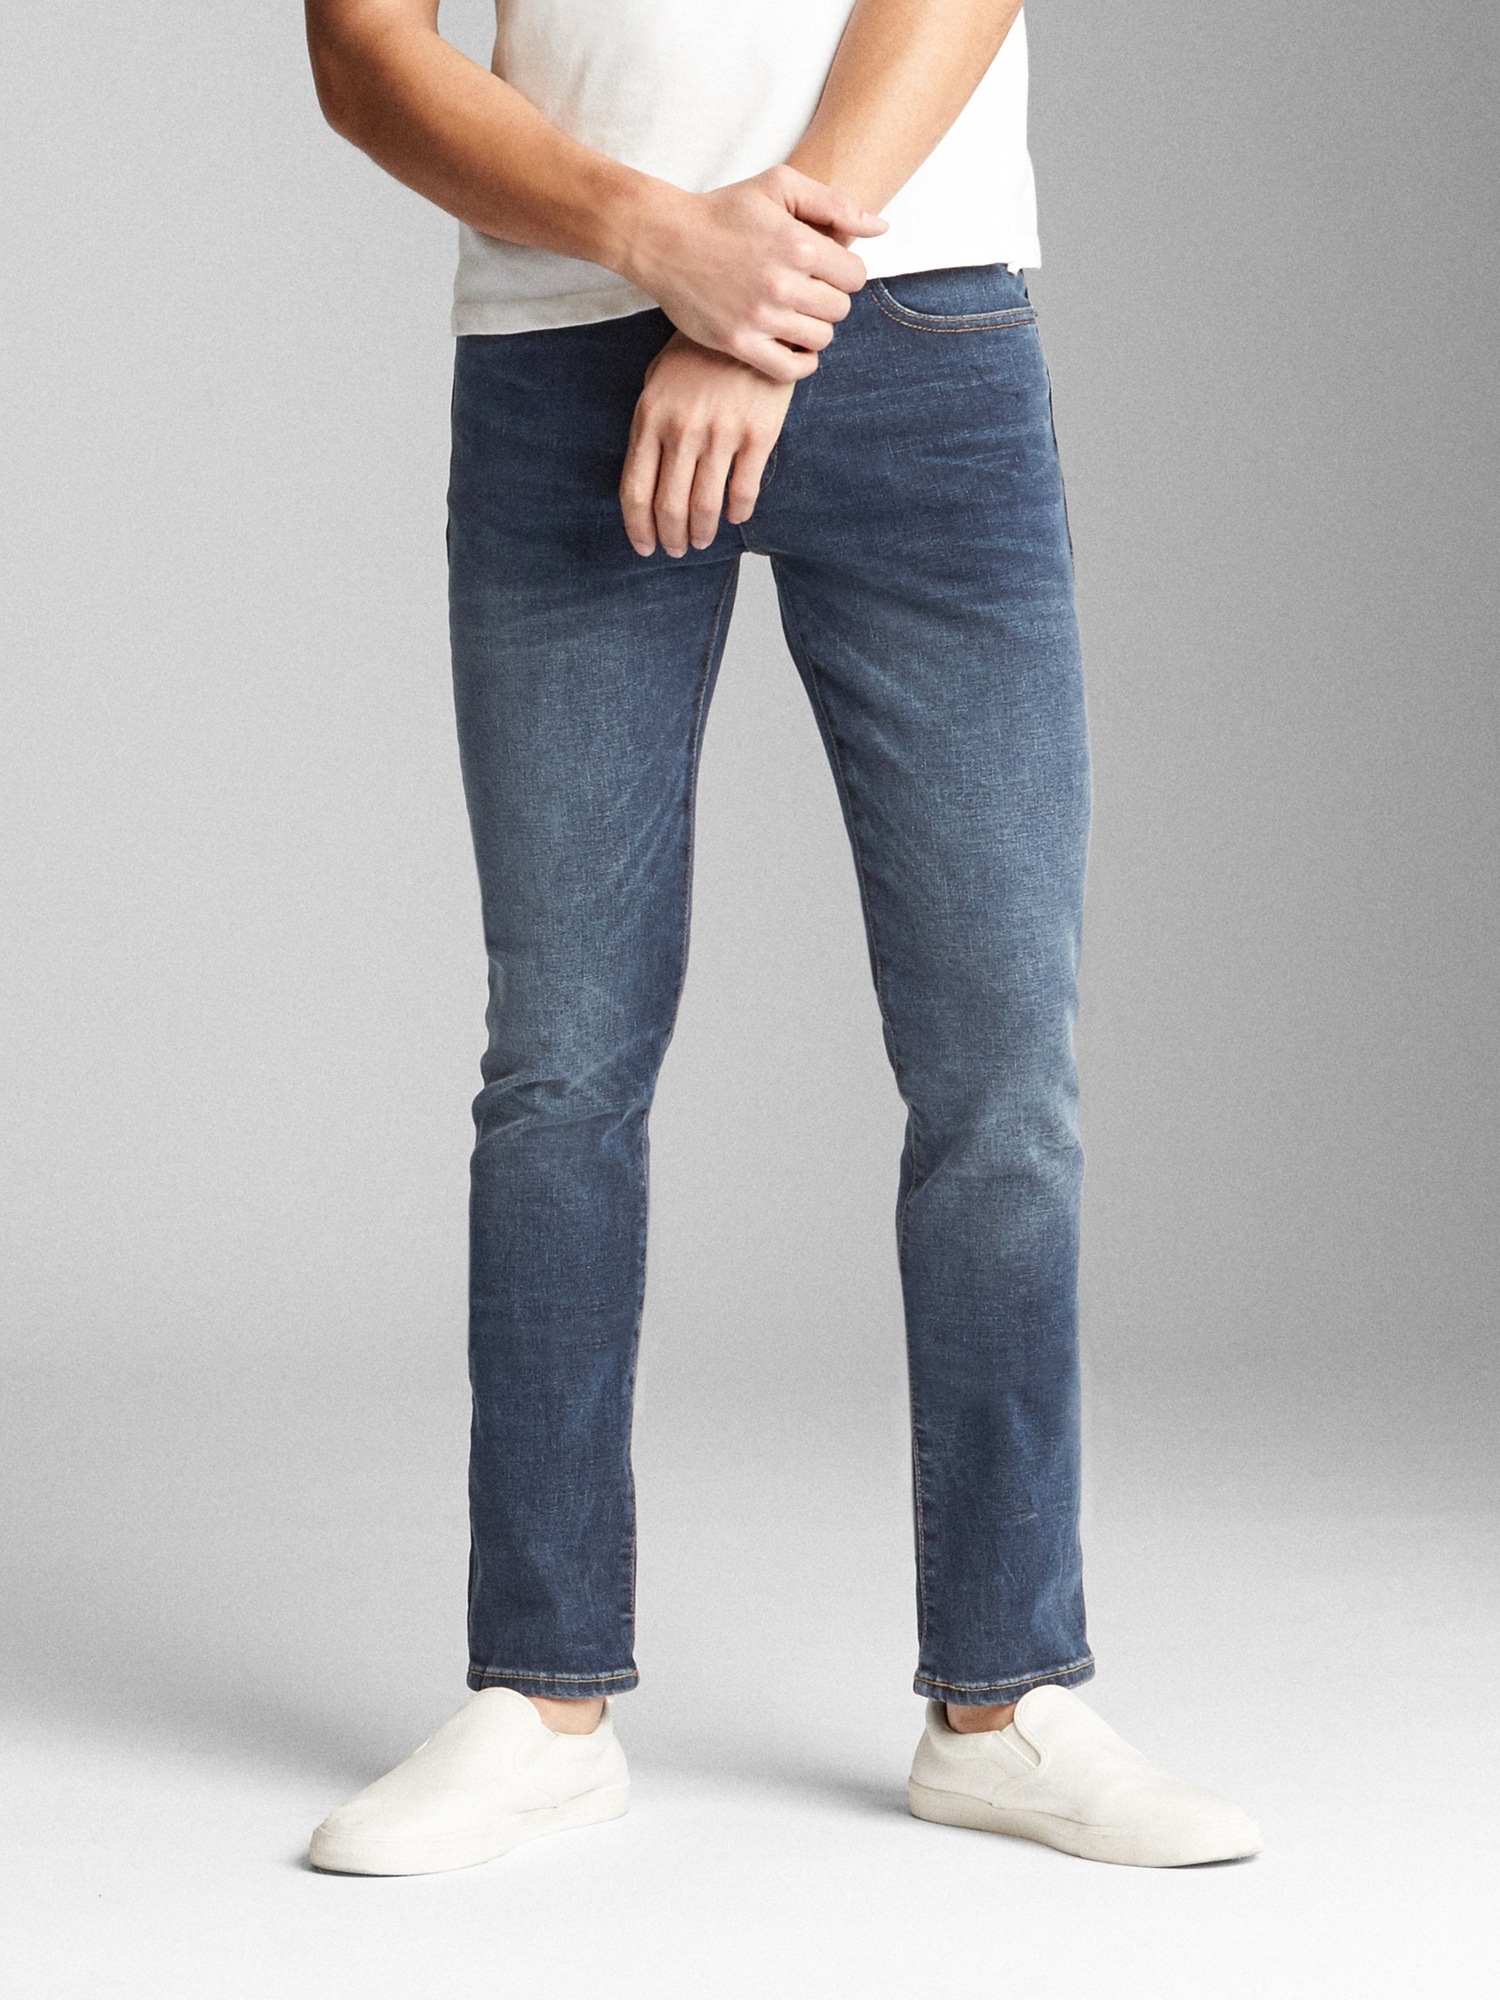 Gap Slim Jeans In Gapflex With Washwell Rinse